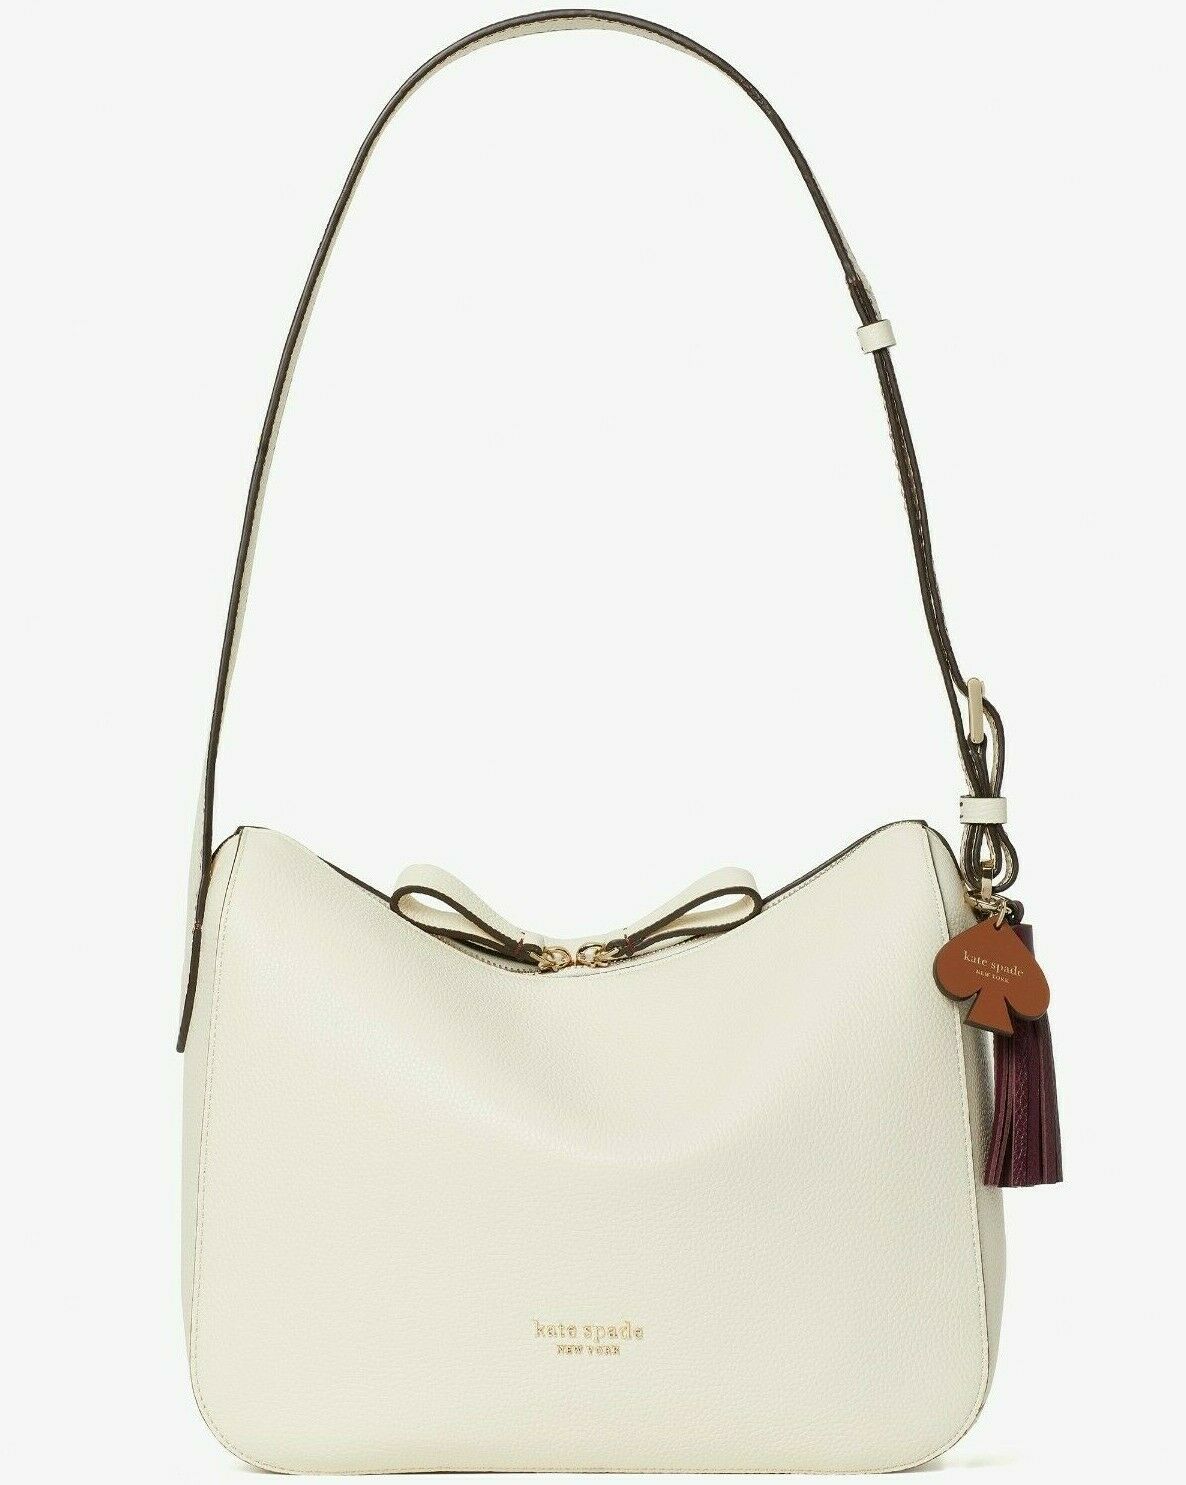 Kate Spade Anyday Medium Shoulder Bag Cream Leather PXR00248 White NWT $298 FS